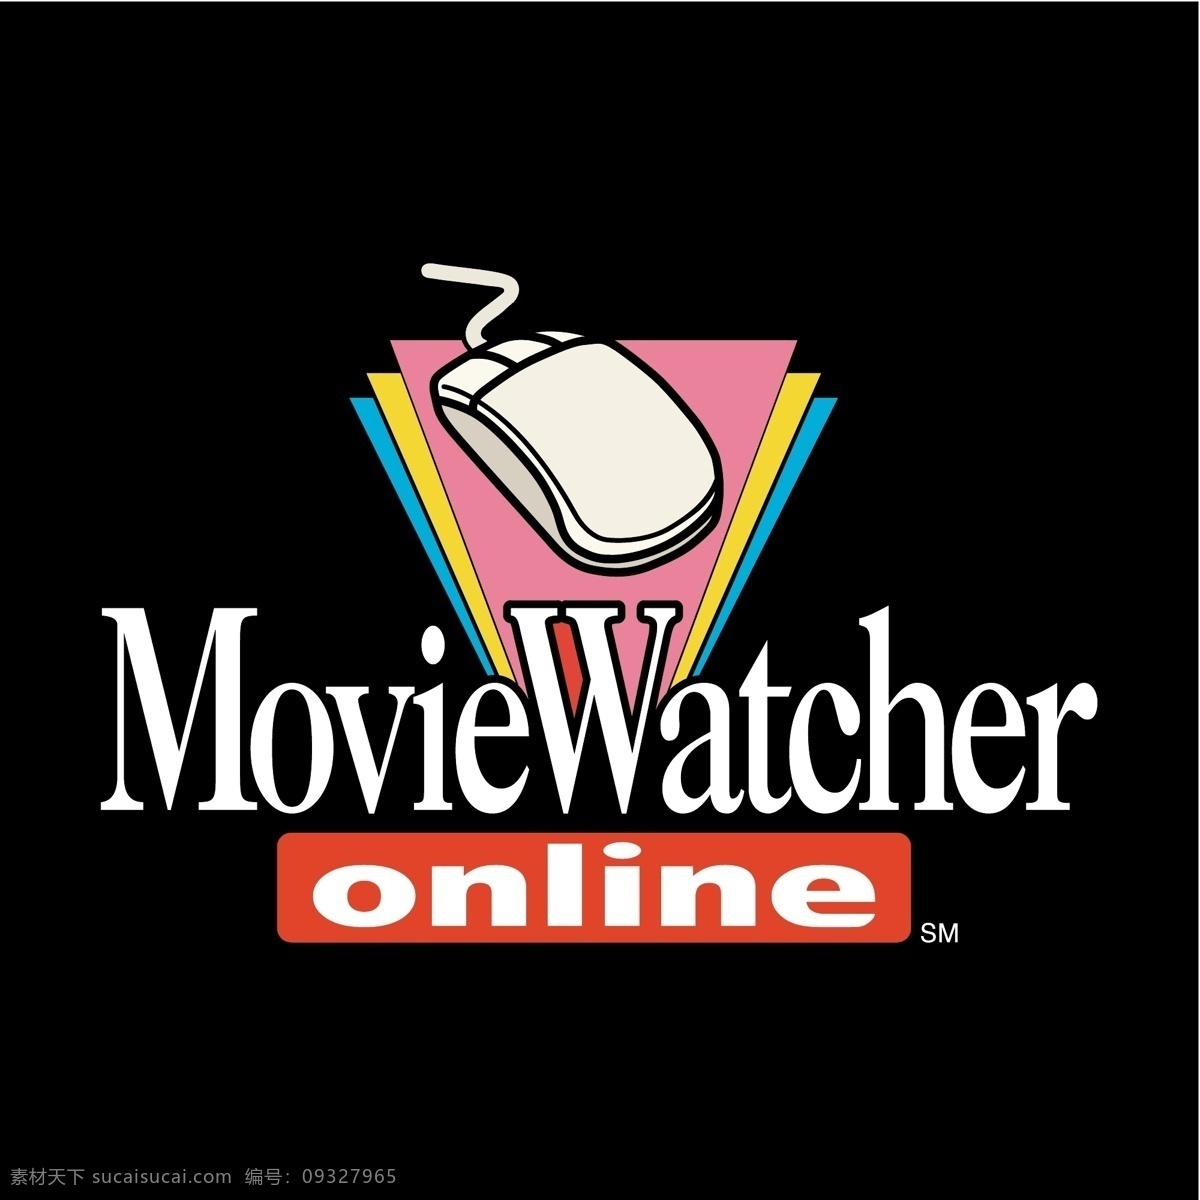 moviewatcher 在线 在线图片 免费在线 矢量 图形 艺术 在线免费下载 免费 在线下载 黑色